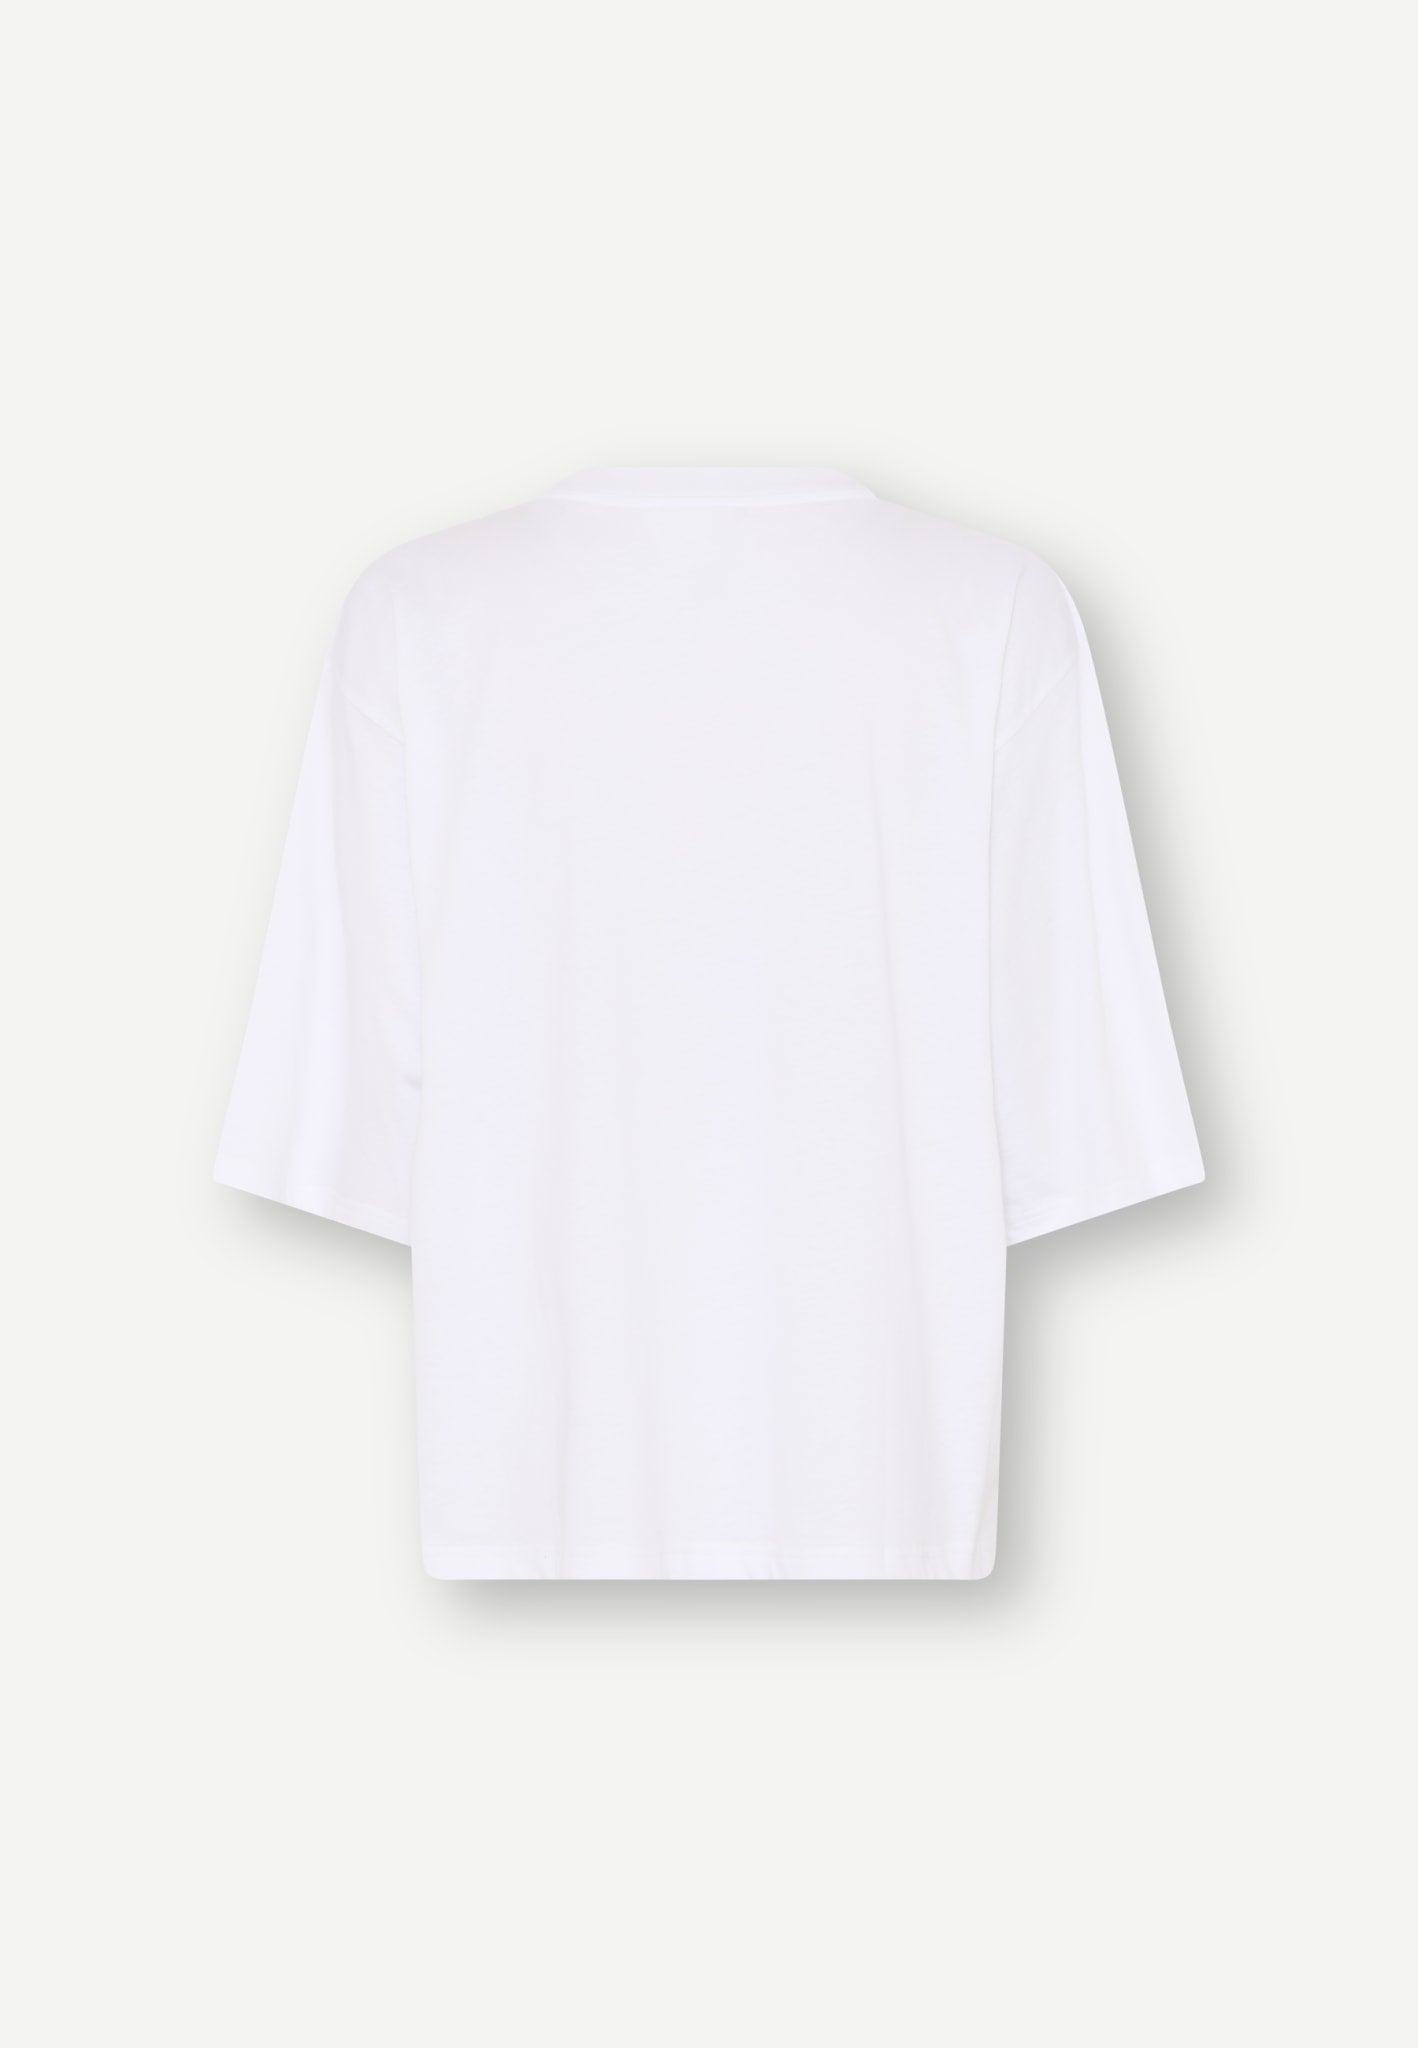 Herskind OS T-Shirt White Logo